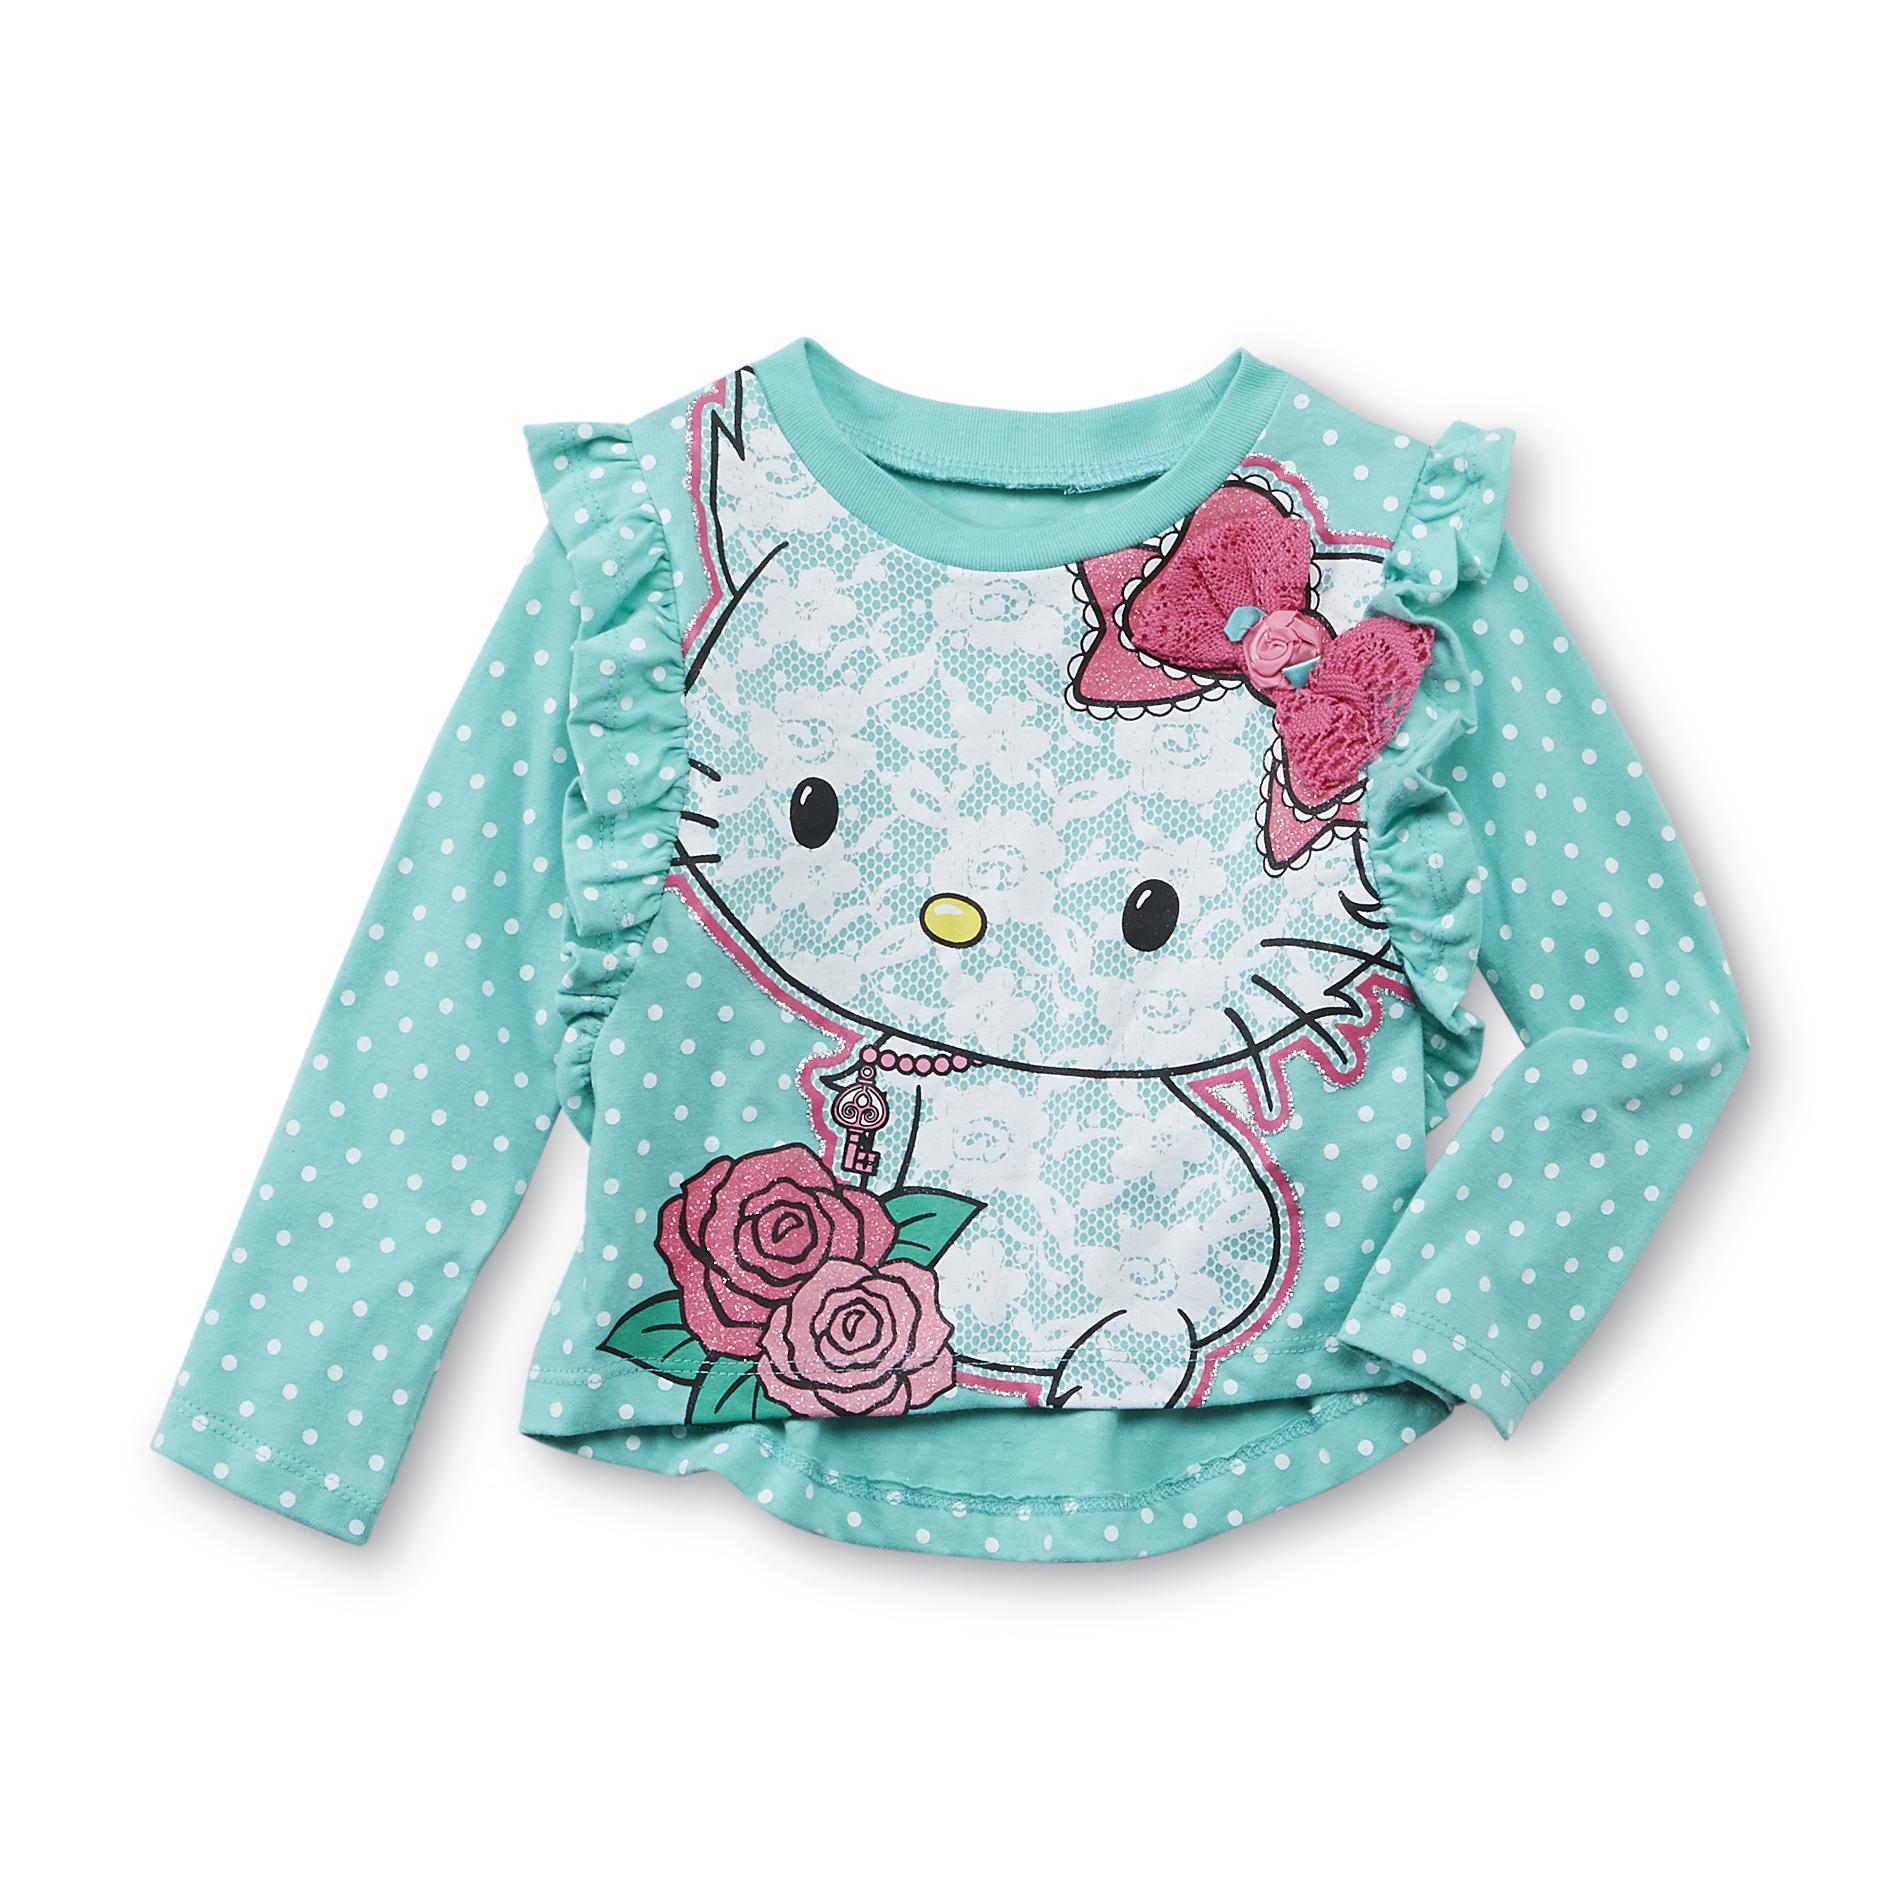 Hello Kitty Baby Toddler Girl's Embellished Top - Polka Dot